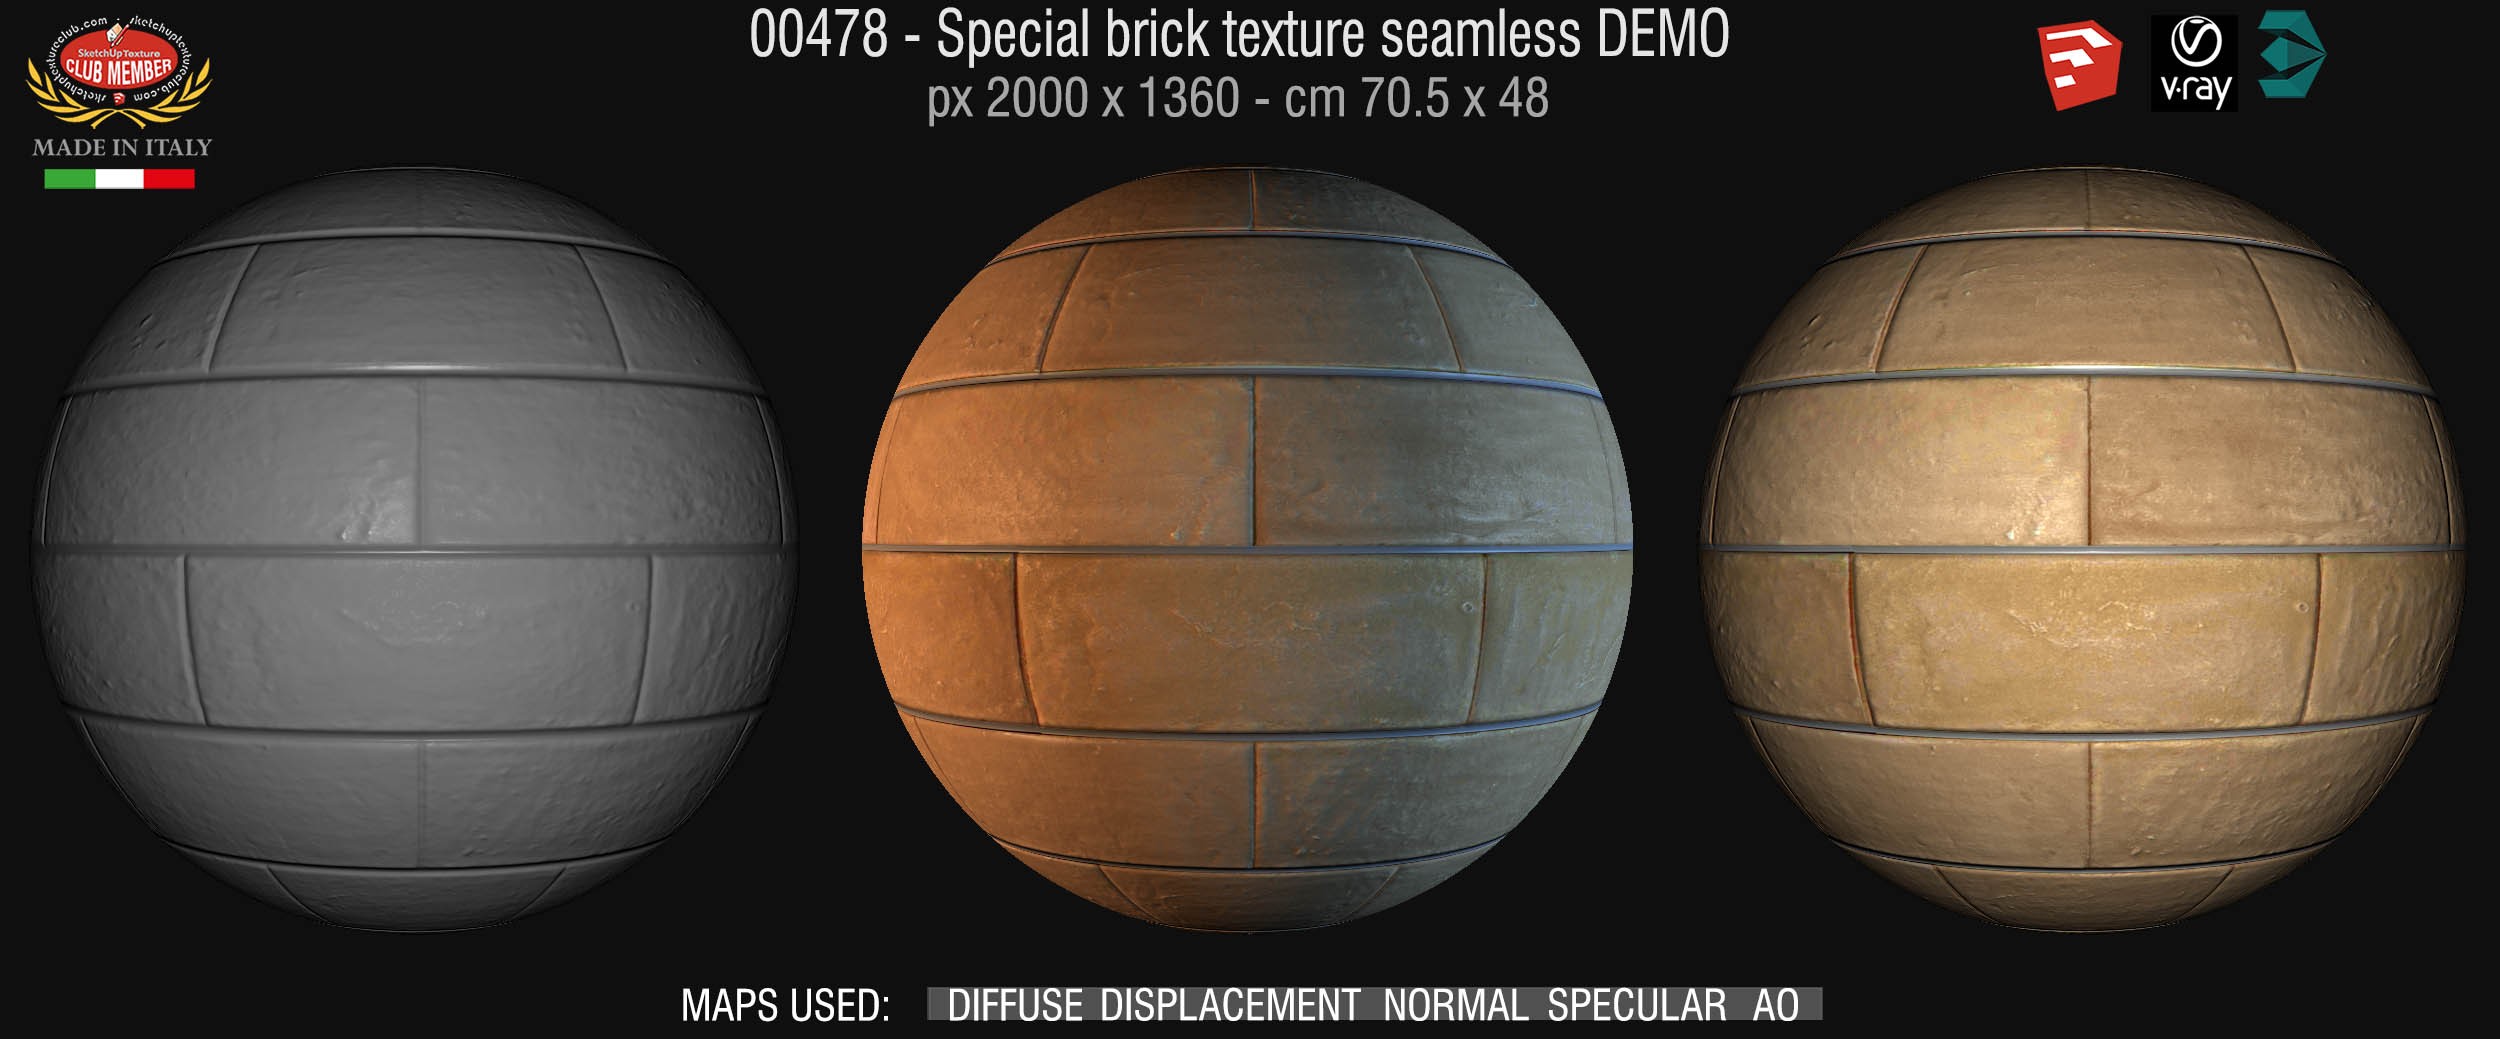 00478 Special brick texture seamless + maps DEMO